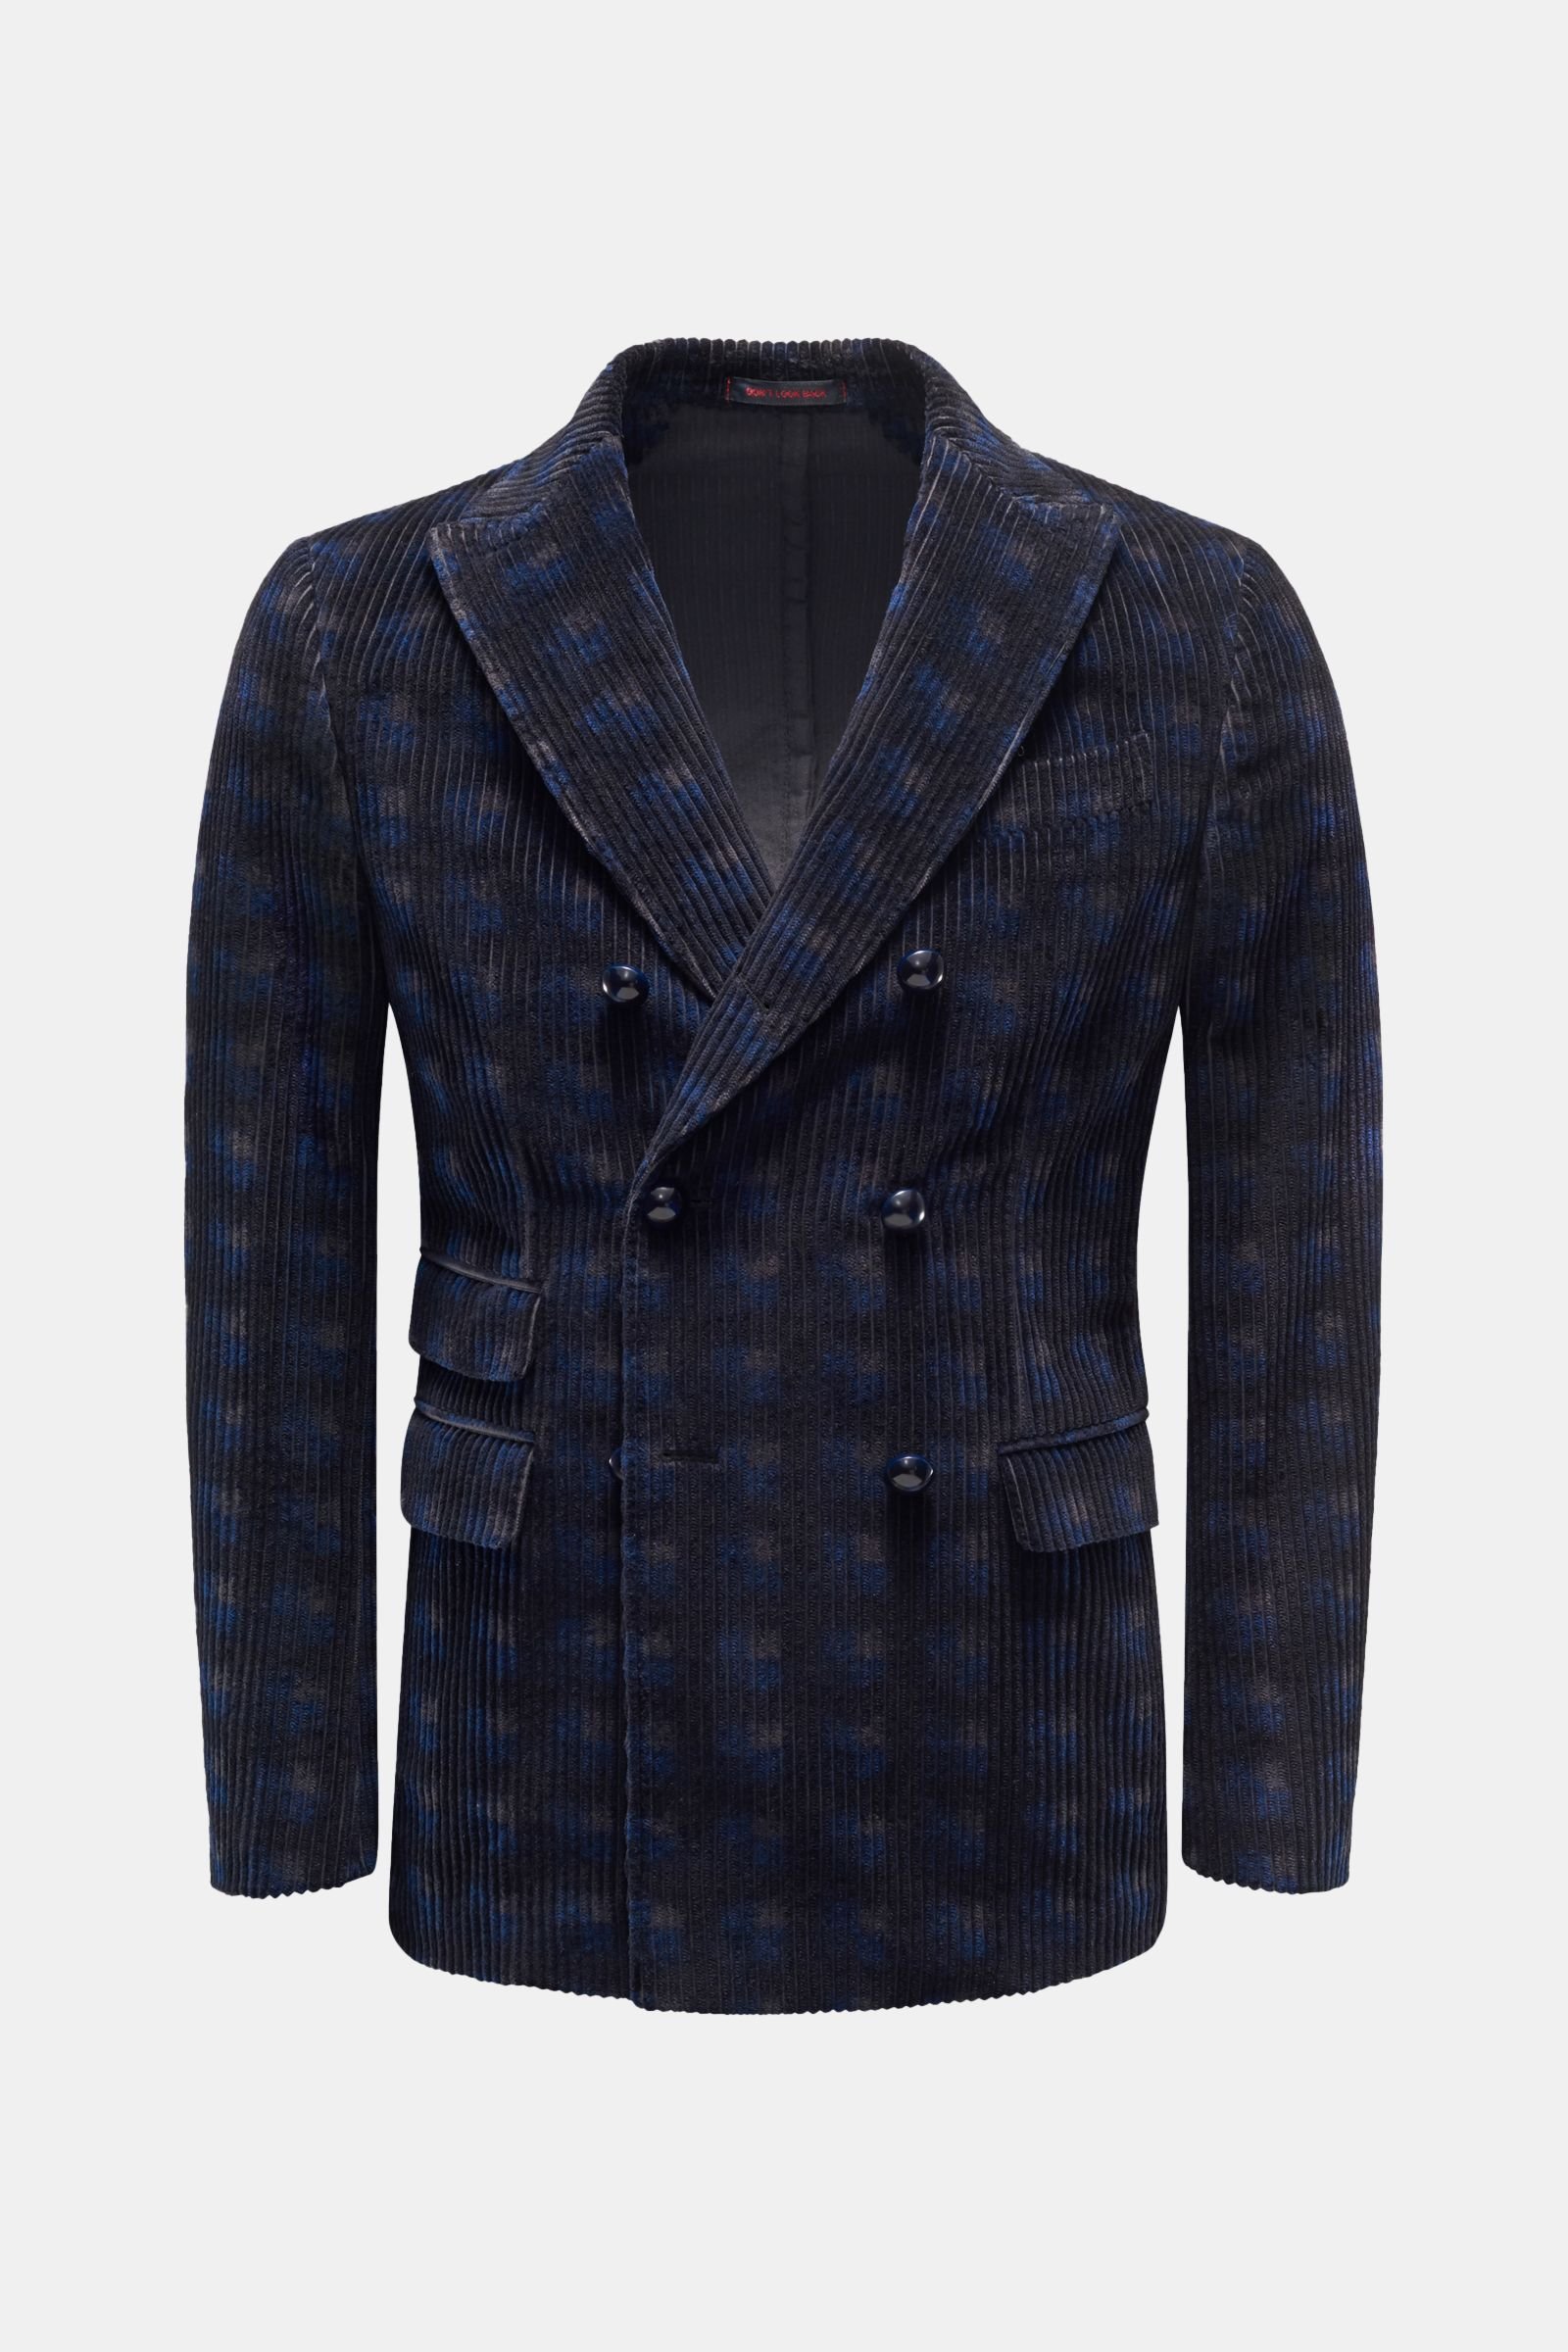 Corduroy jacket 'Miro' black patterned